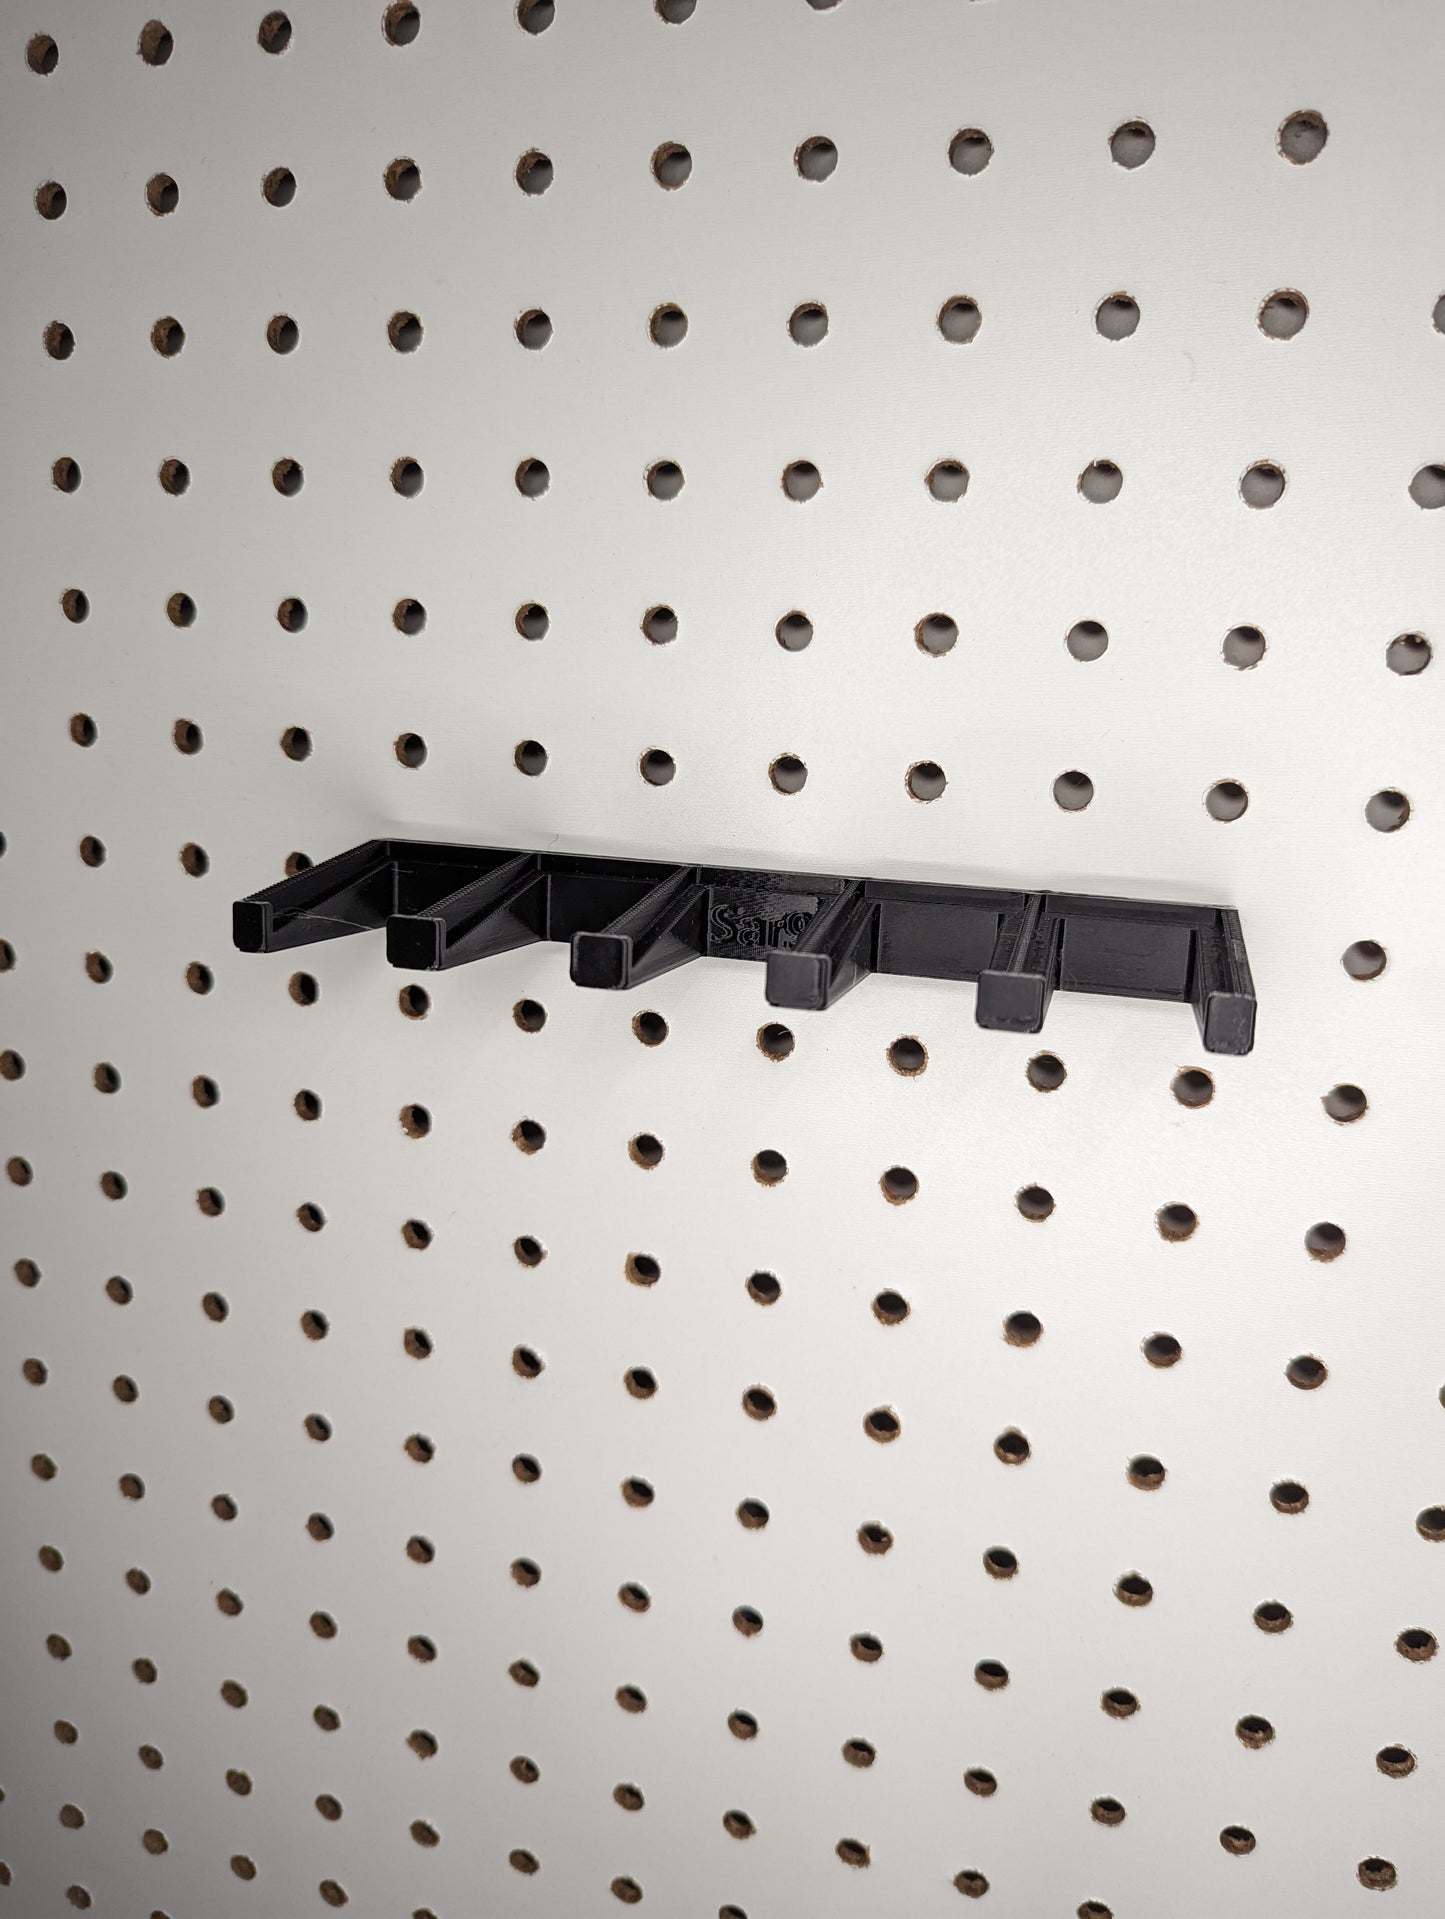 Mount for SAR9 Mags - Pegboard / IKEA Skadis / Wall Control / Vaultek | Magazine Holder Storage Rack